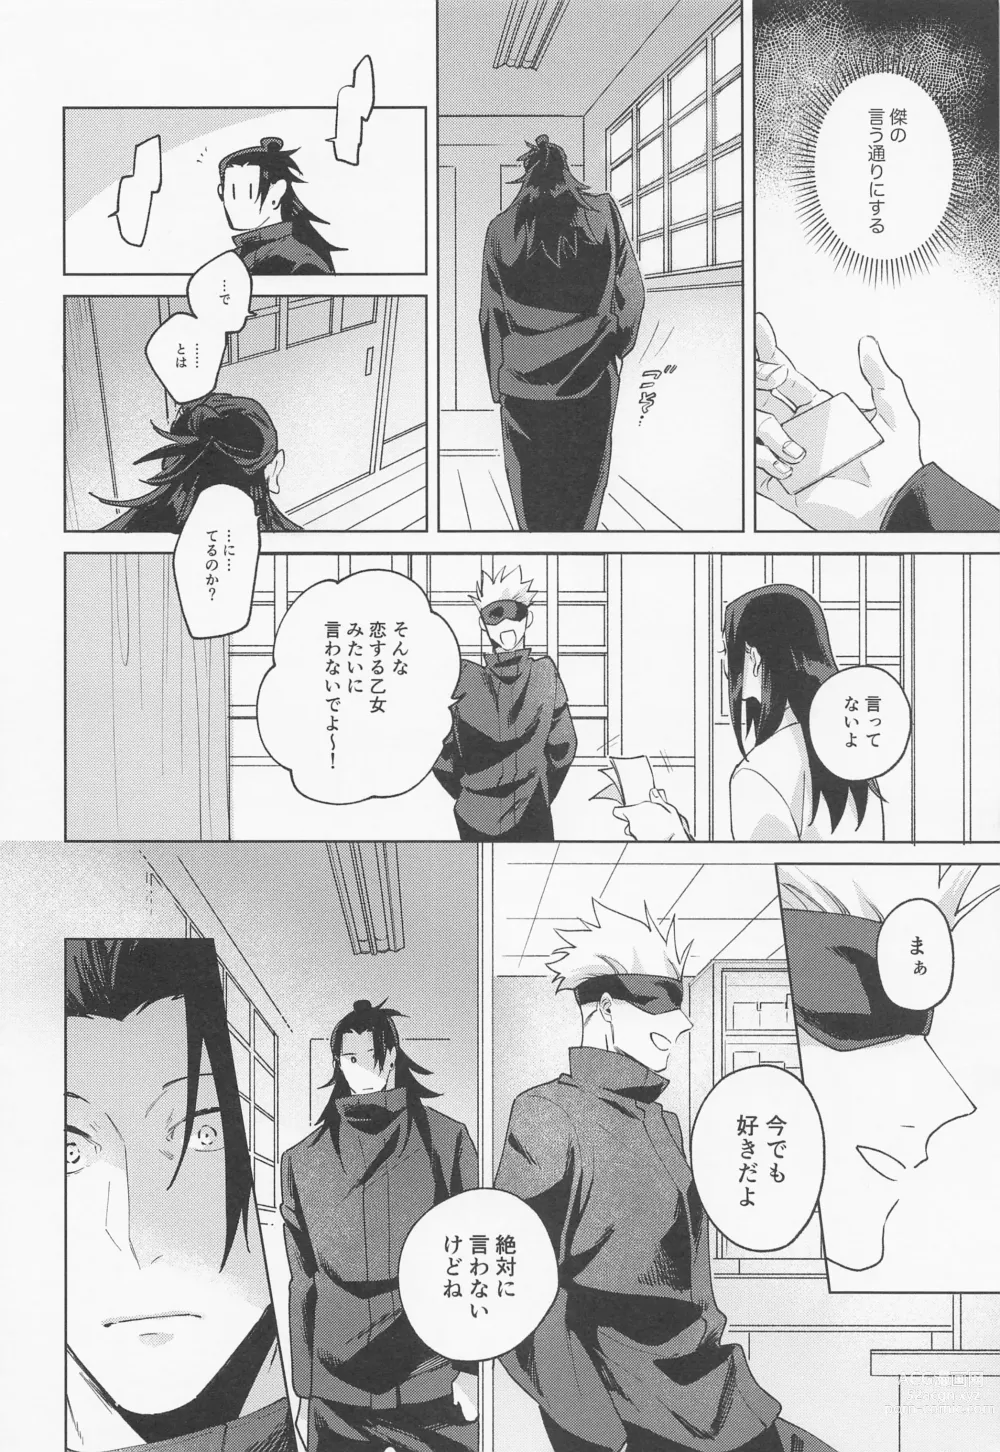 Page 7 of doujinshi Say you love me!